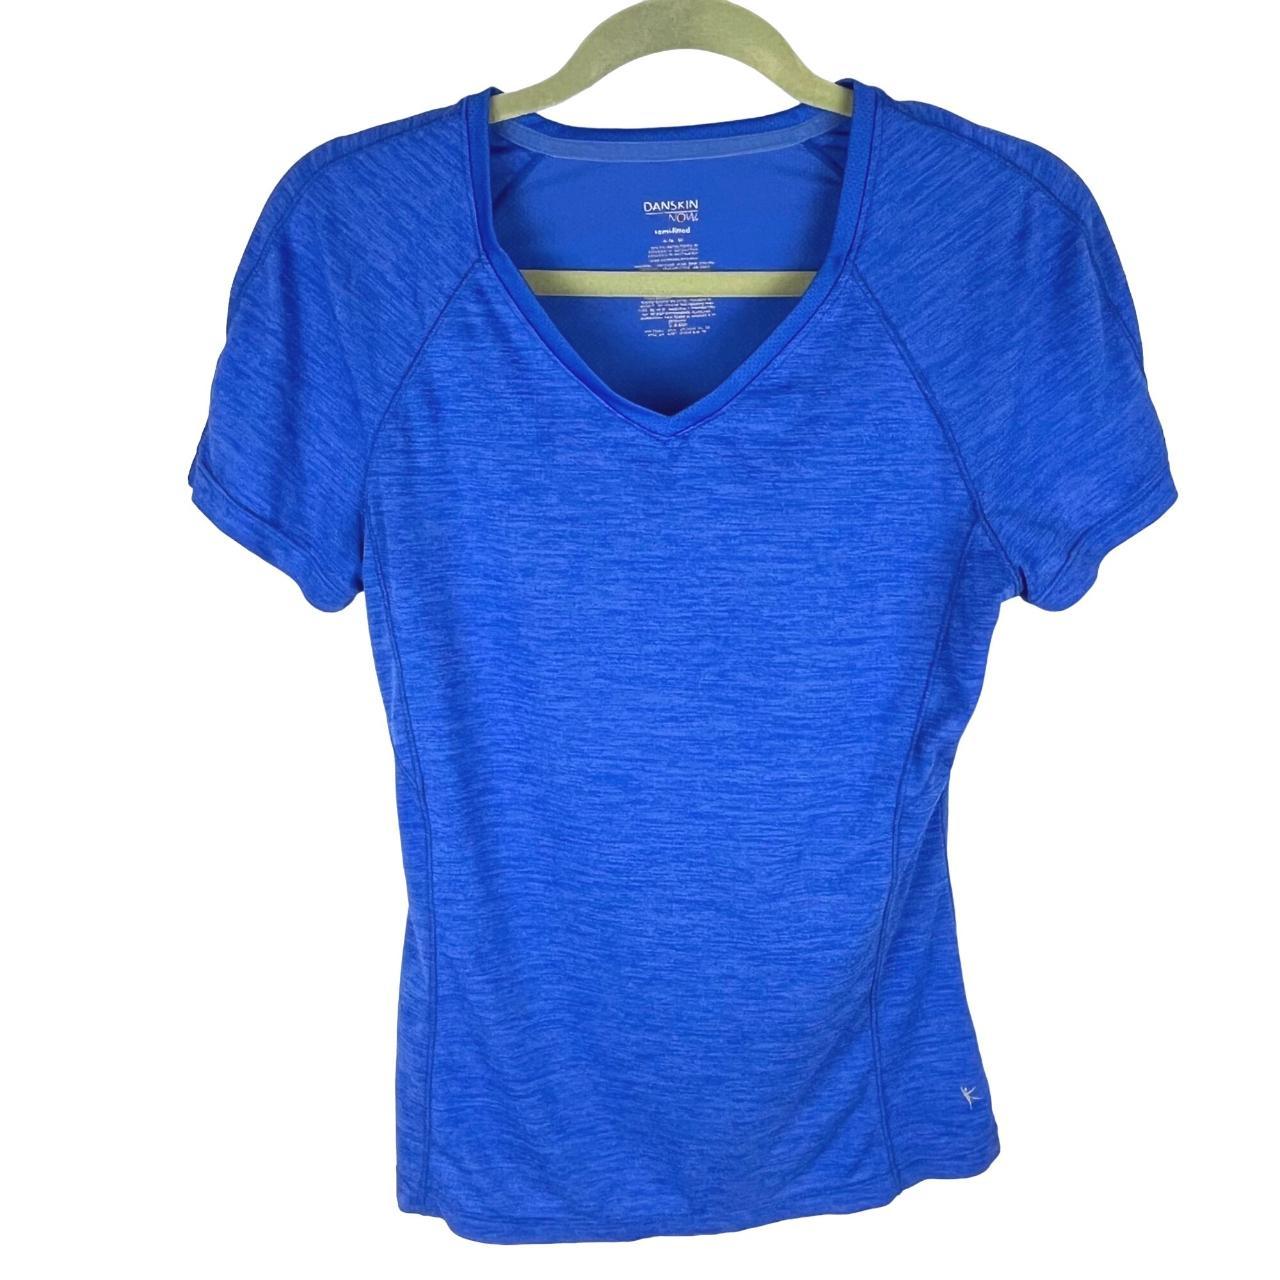 Danskin Now Short-Sleeve Athletic Top T-Shirt Blue - Depop